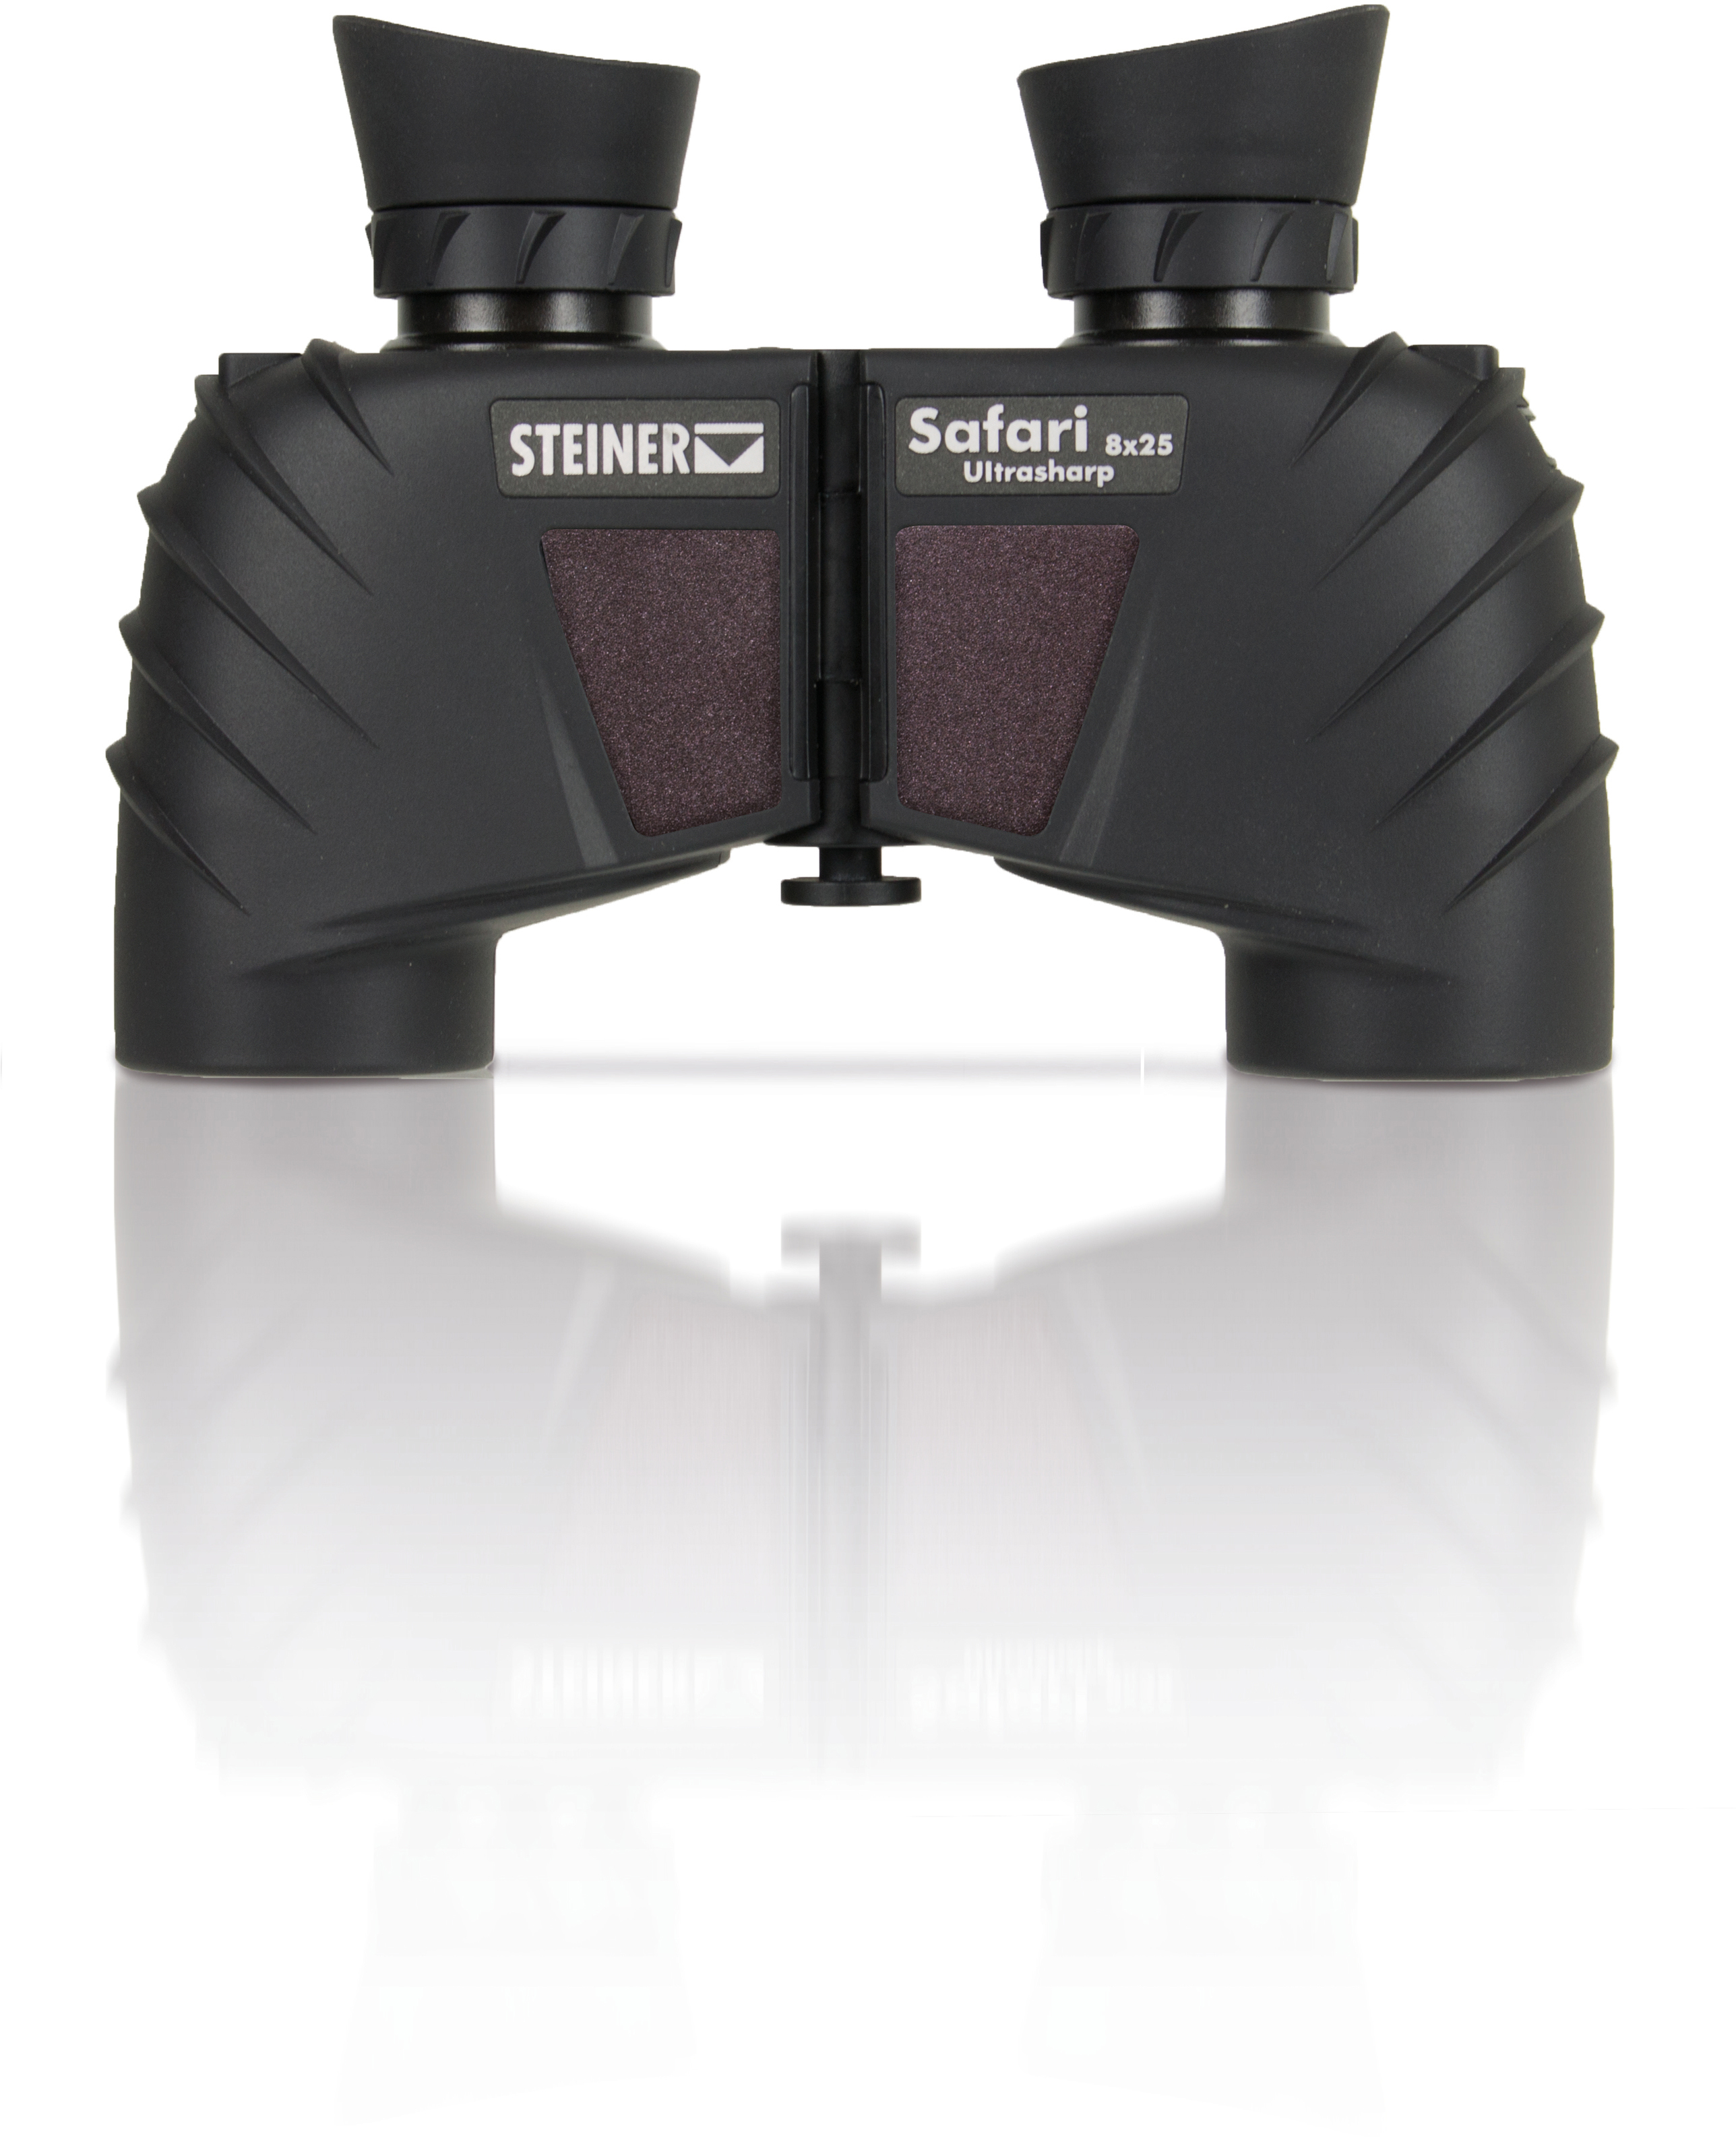 STEINER 25 mm, UltraSharp 8x, Fernglas Safari